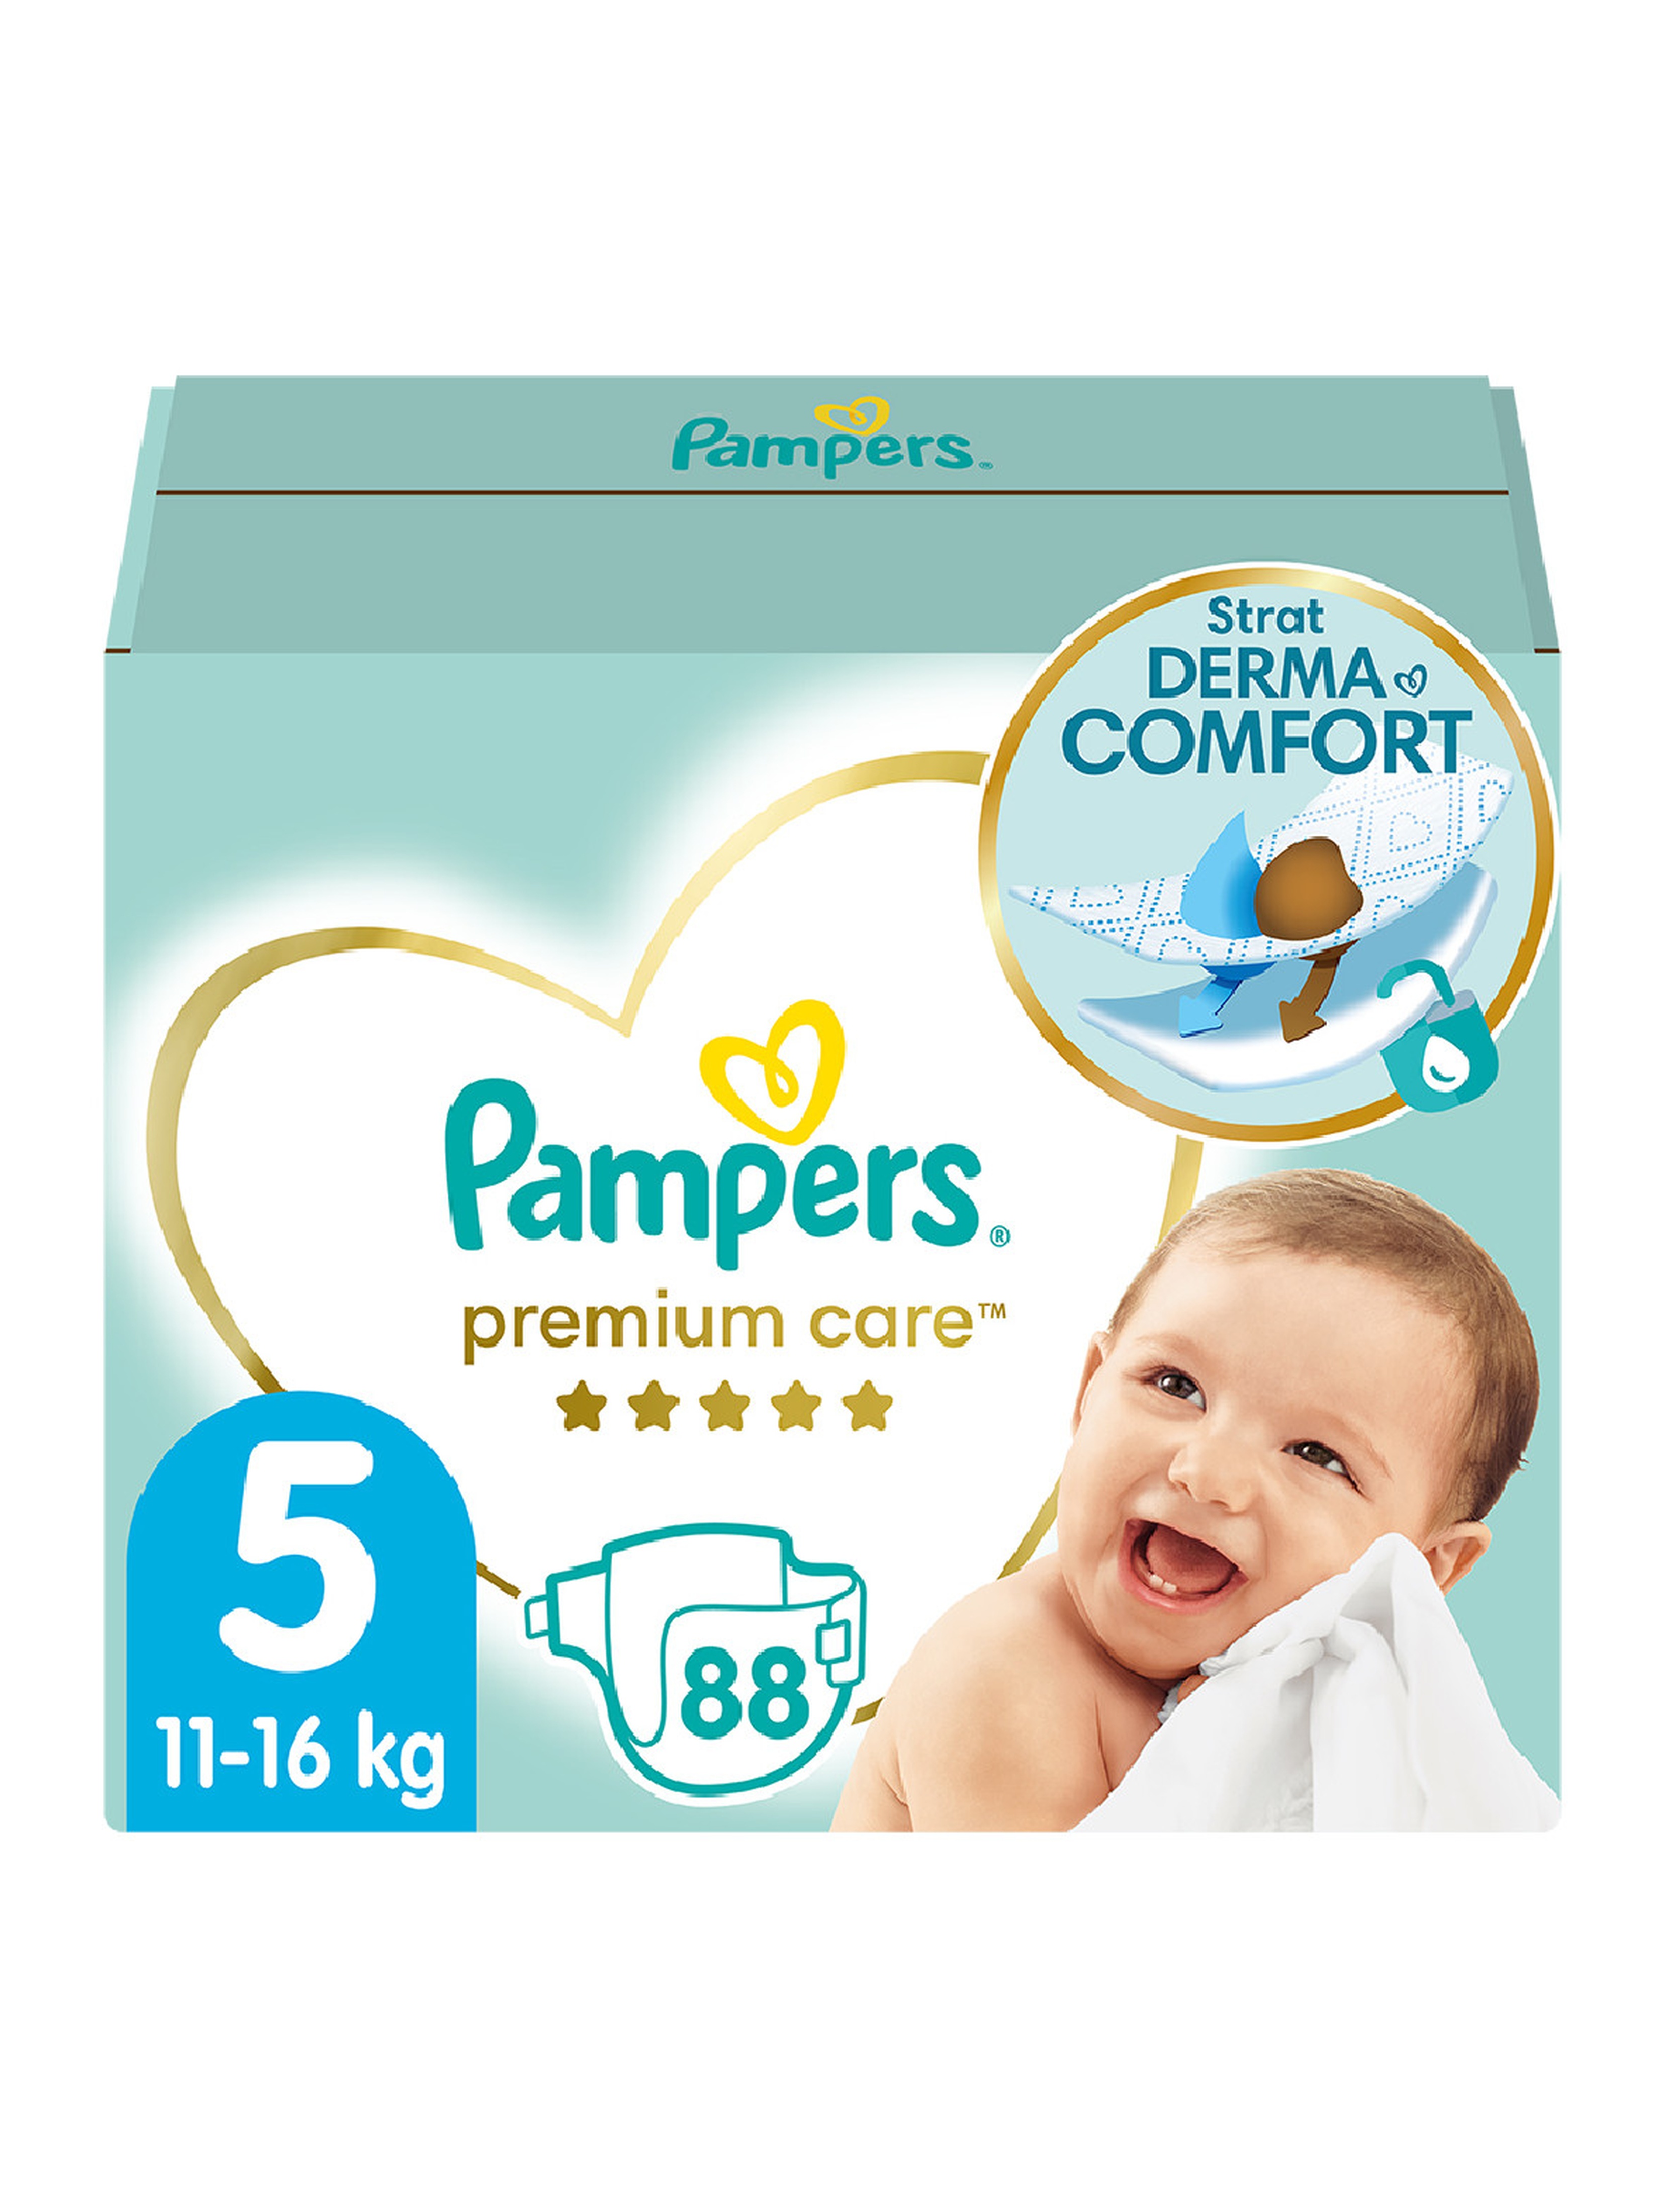 Pampers Premium Care Monthly Box Rozmiar 5, 88 pieluszek 11-16kg